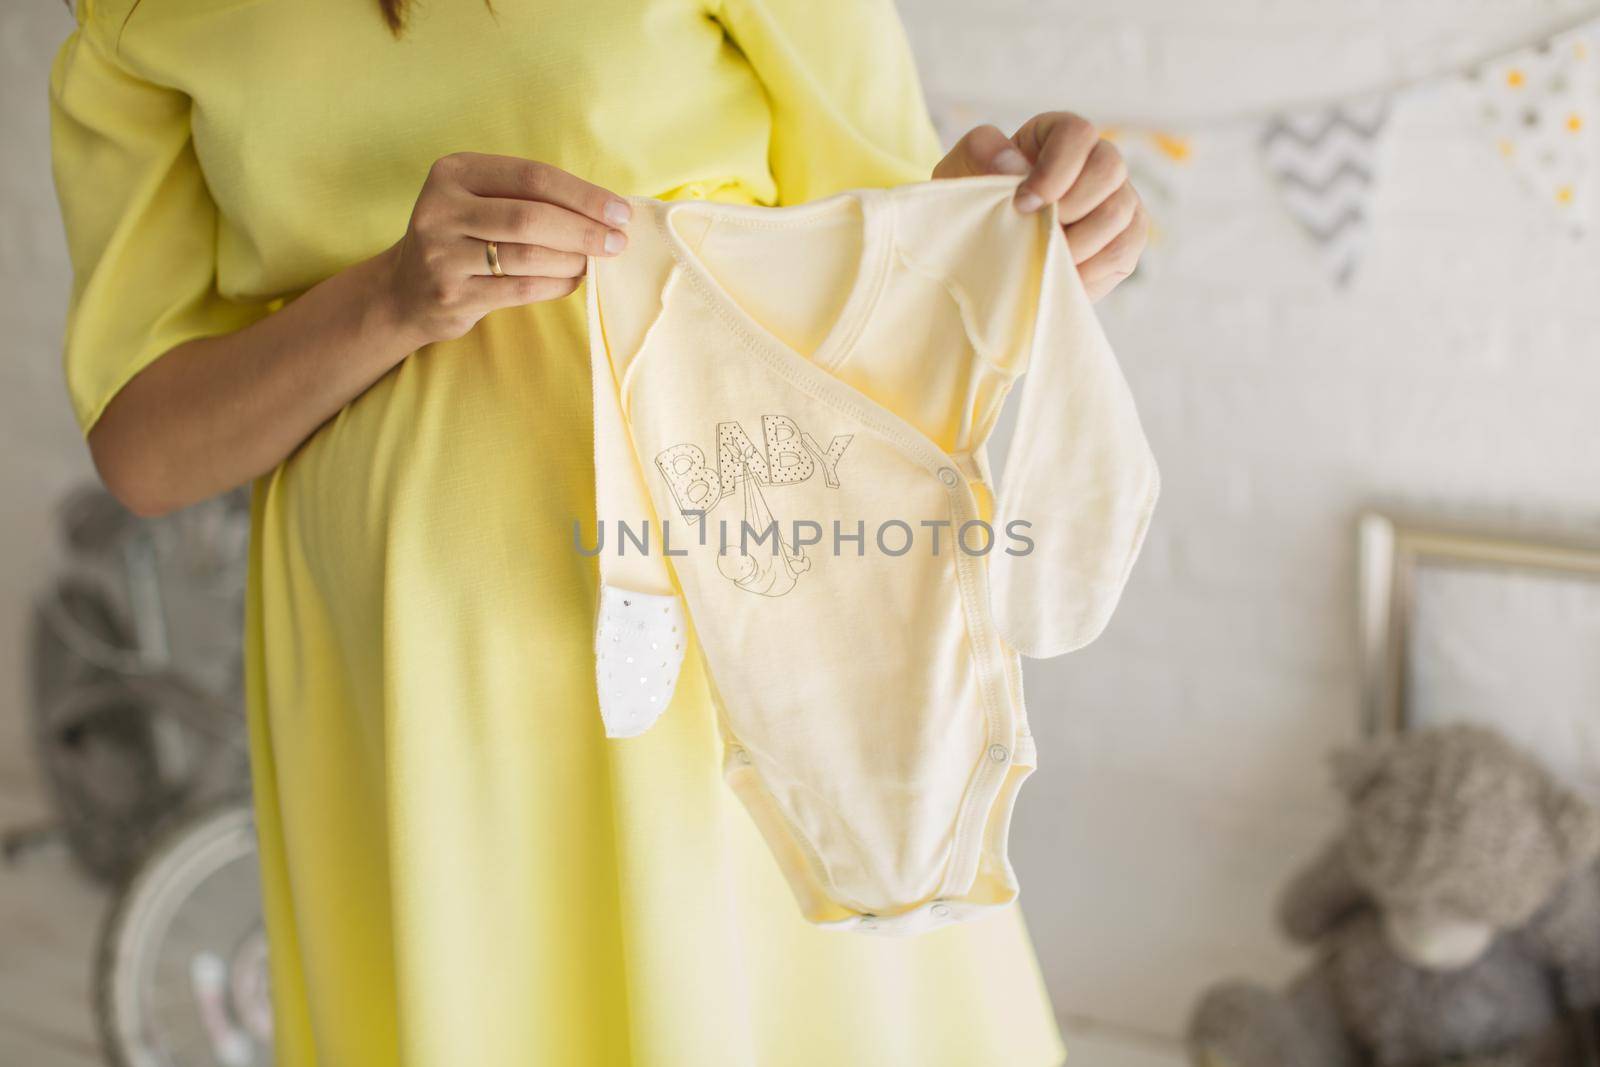 Beautiful pregnant woman in a yellow dress in the Studio.